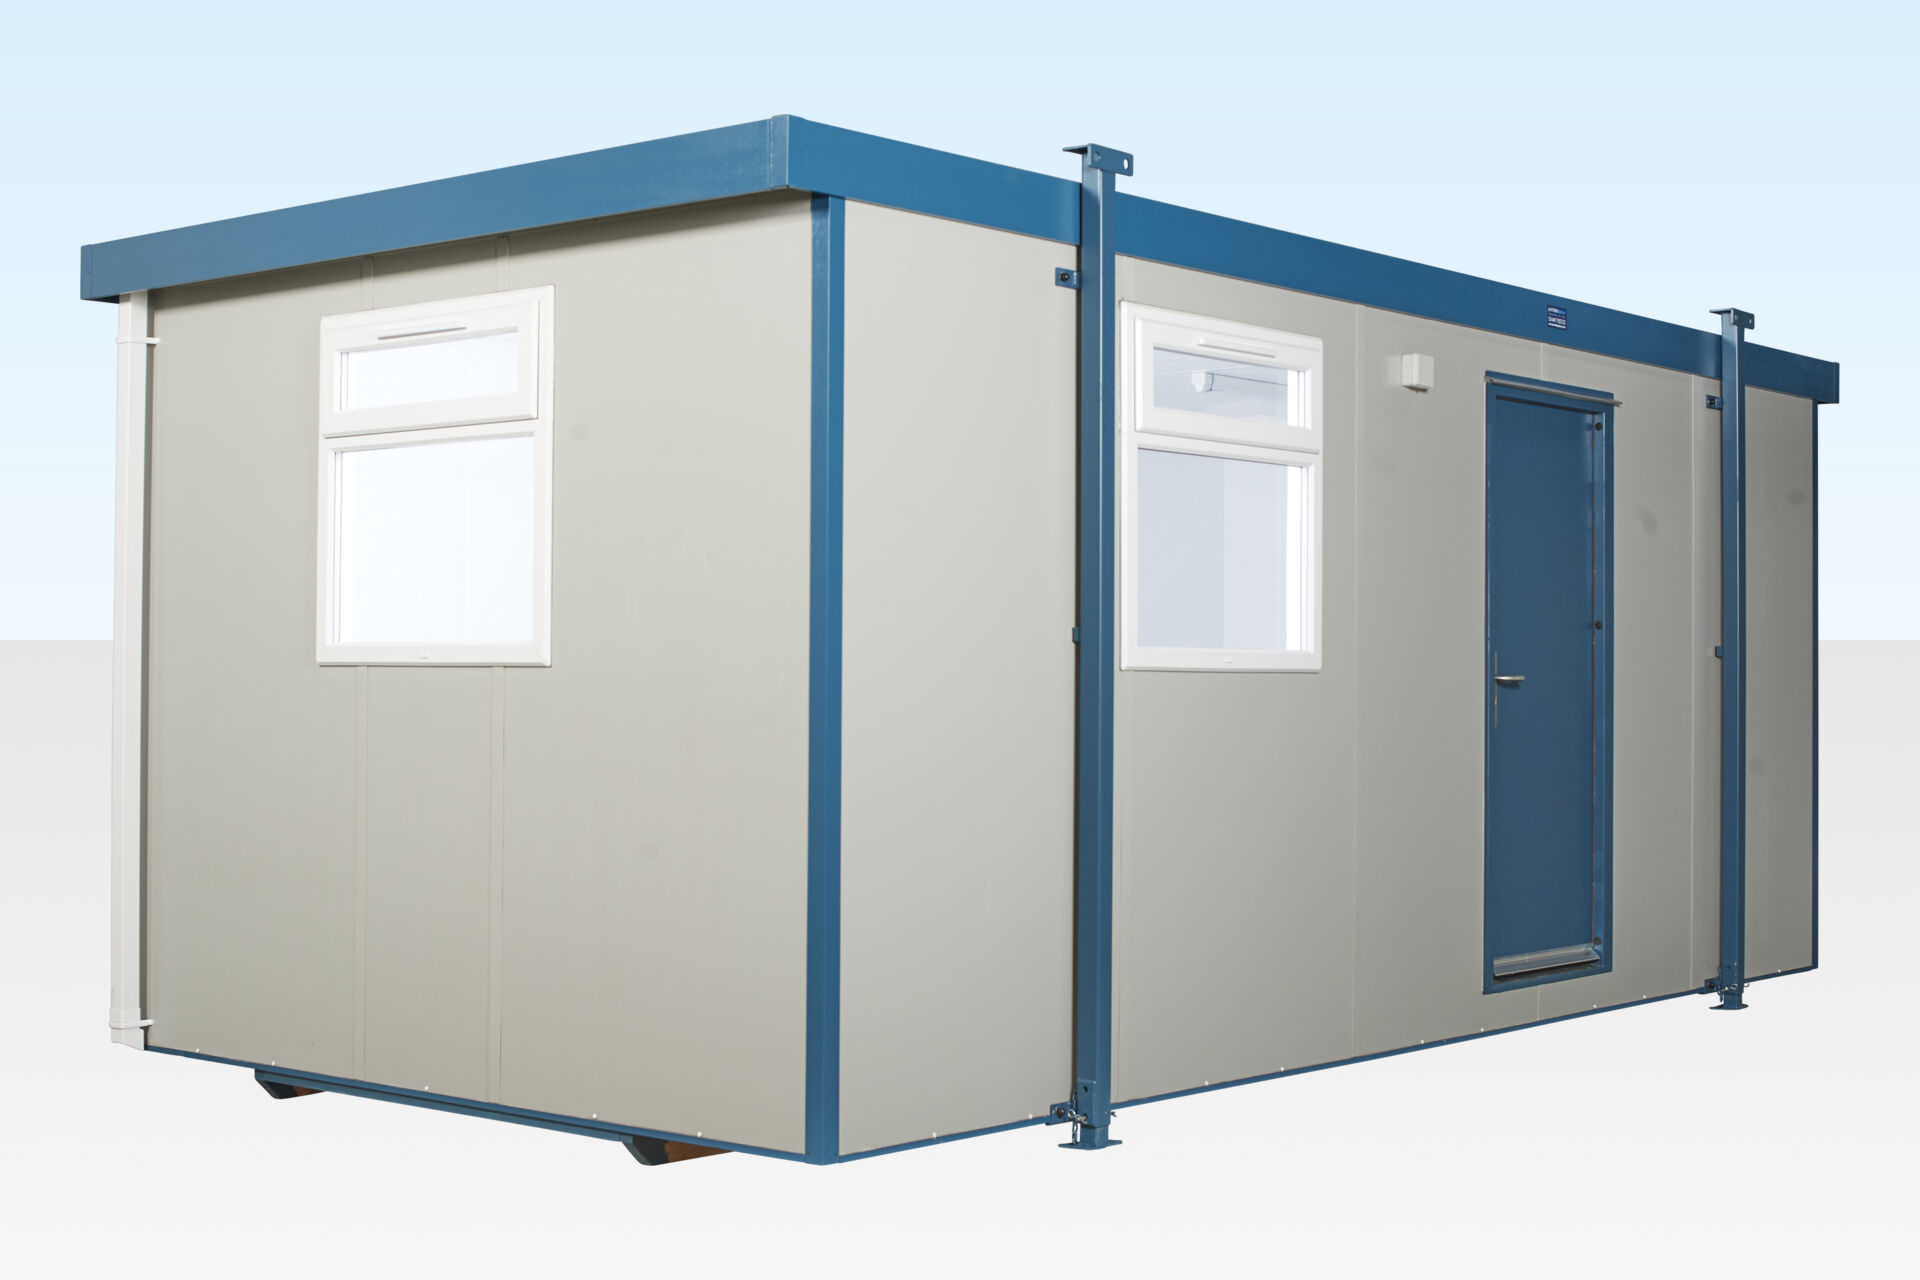 Price for 1SQ/M Modular Building Portable Cabin garden office portable office!